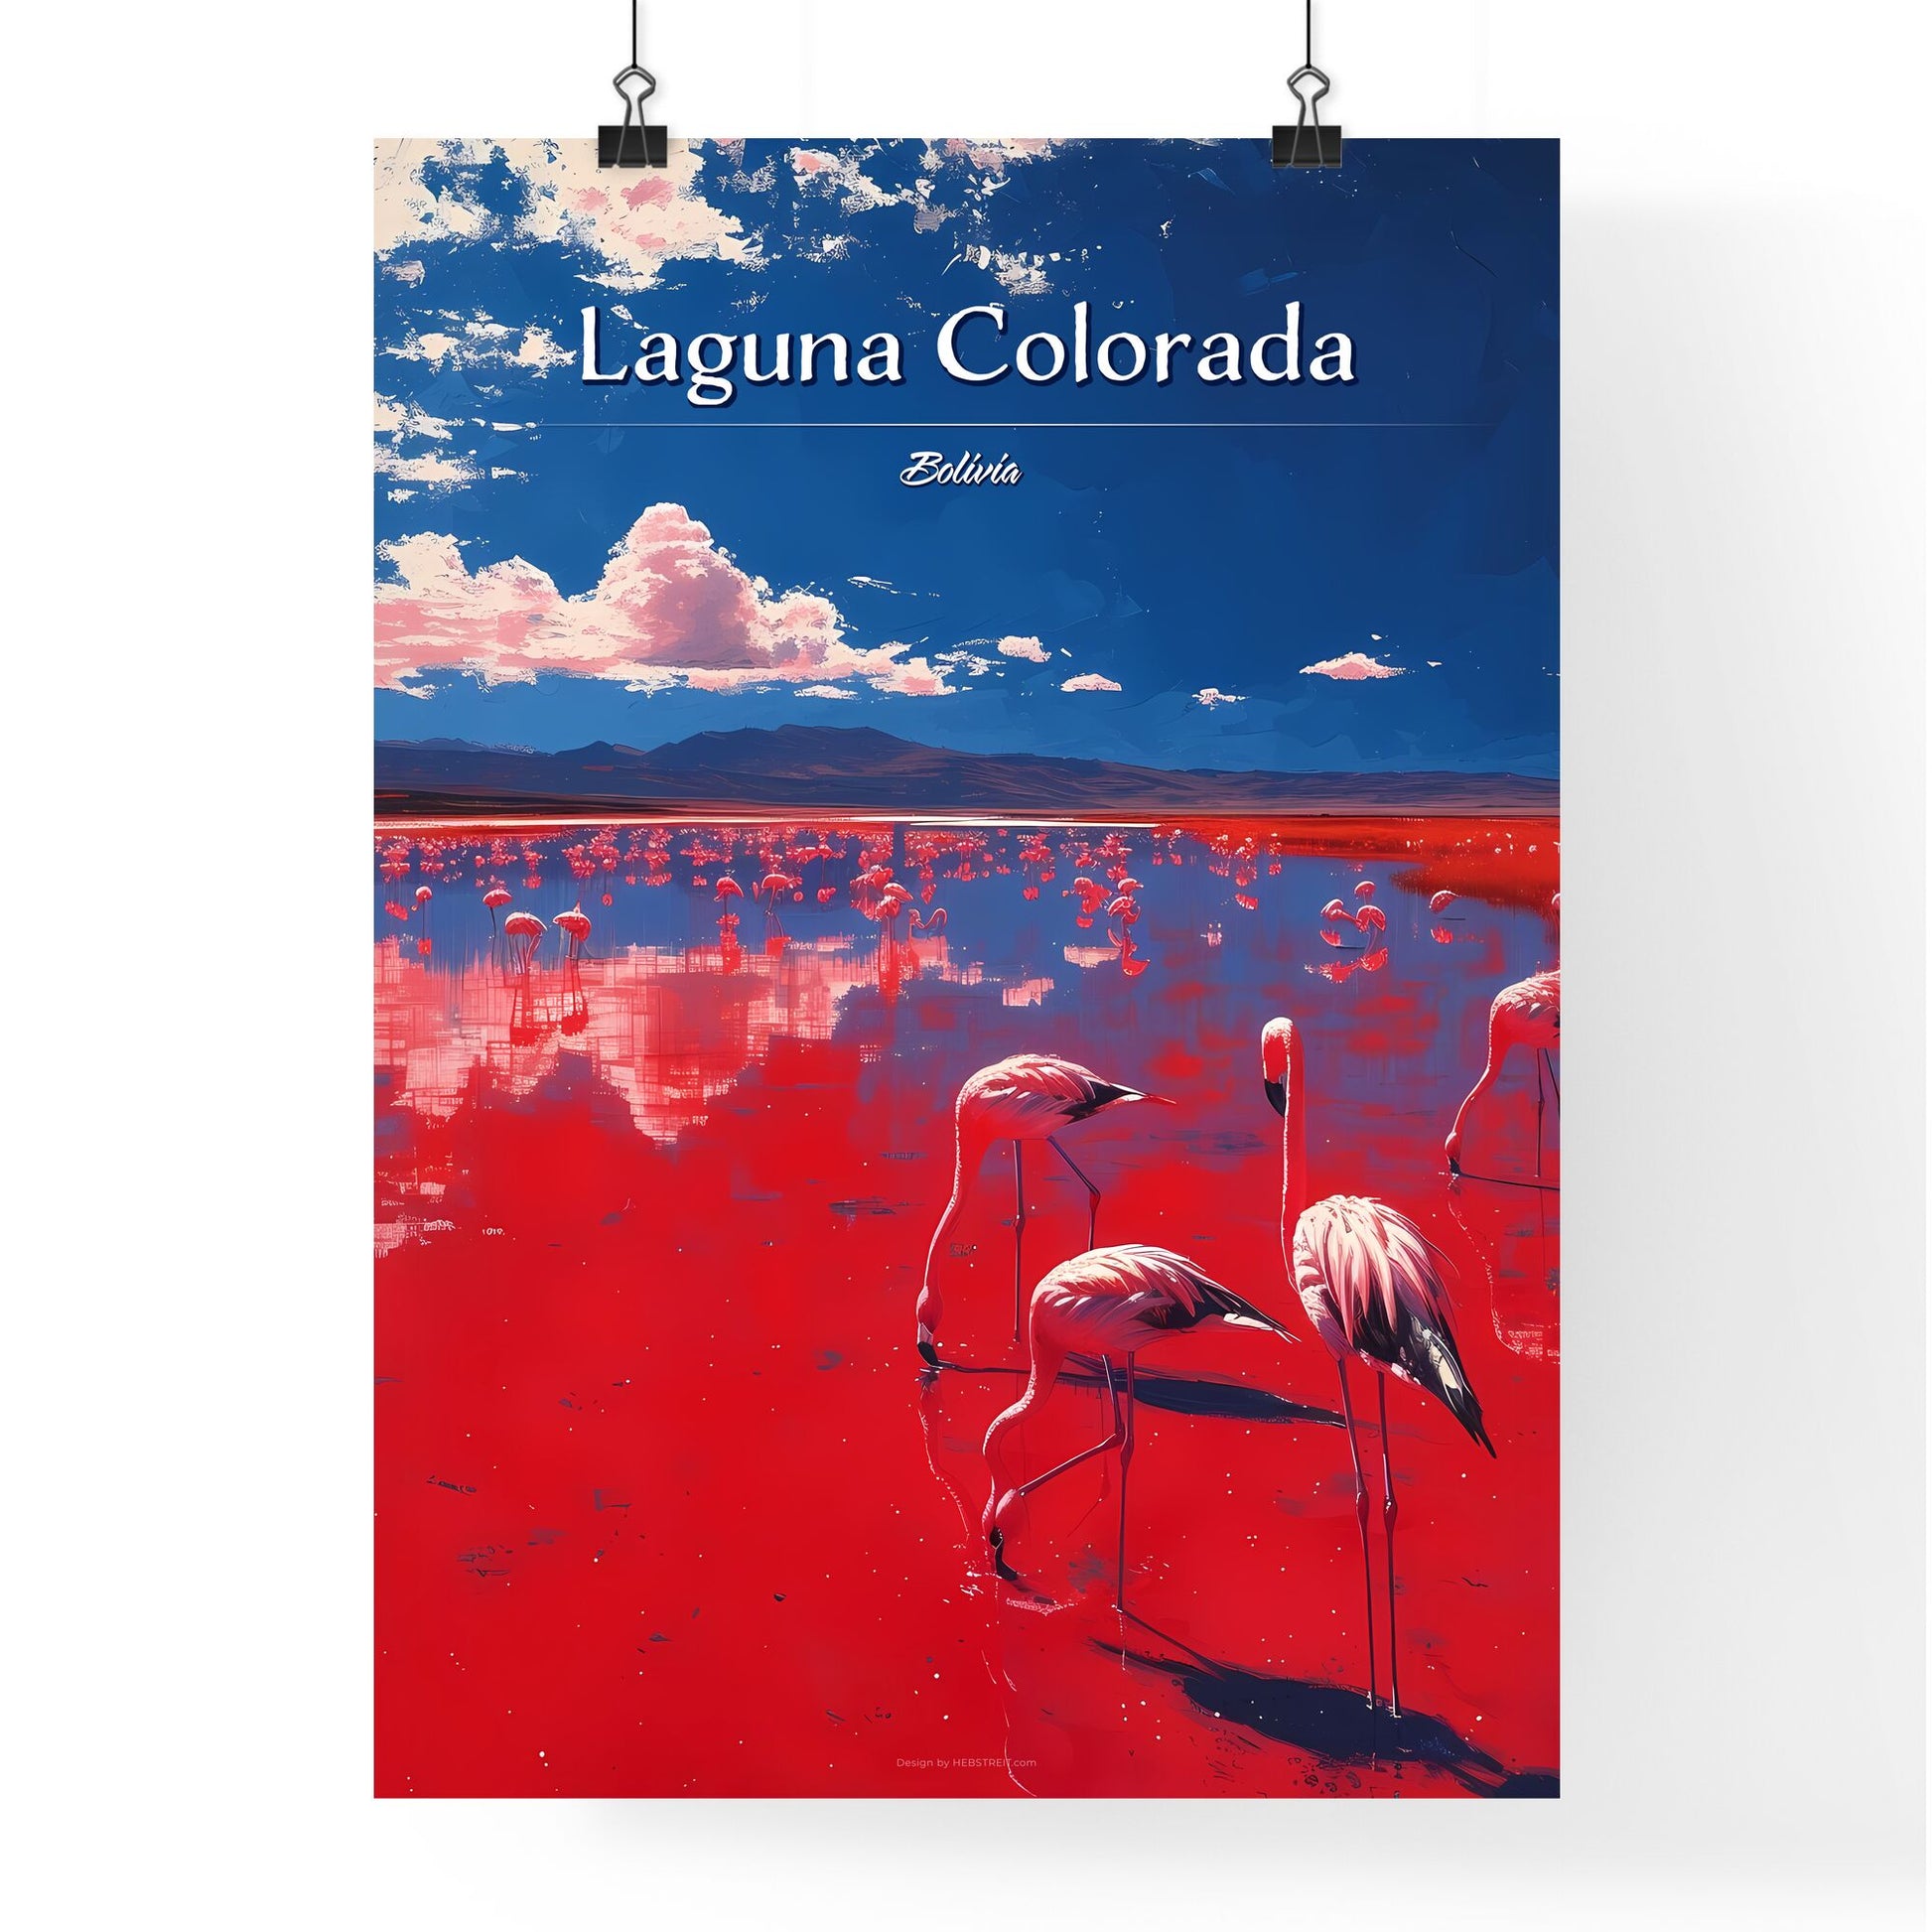 Laguna Colorada, Bolivia - Art print of a group of flamingos in a lake Default Title